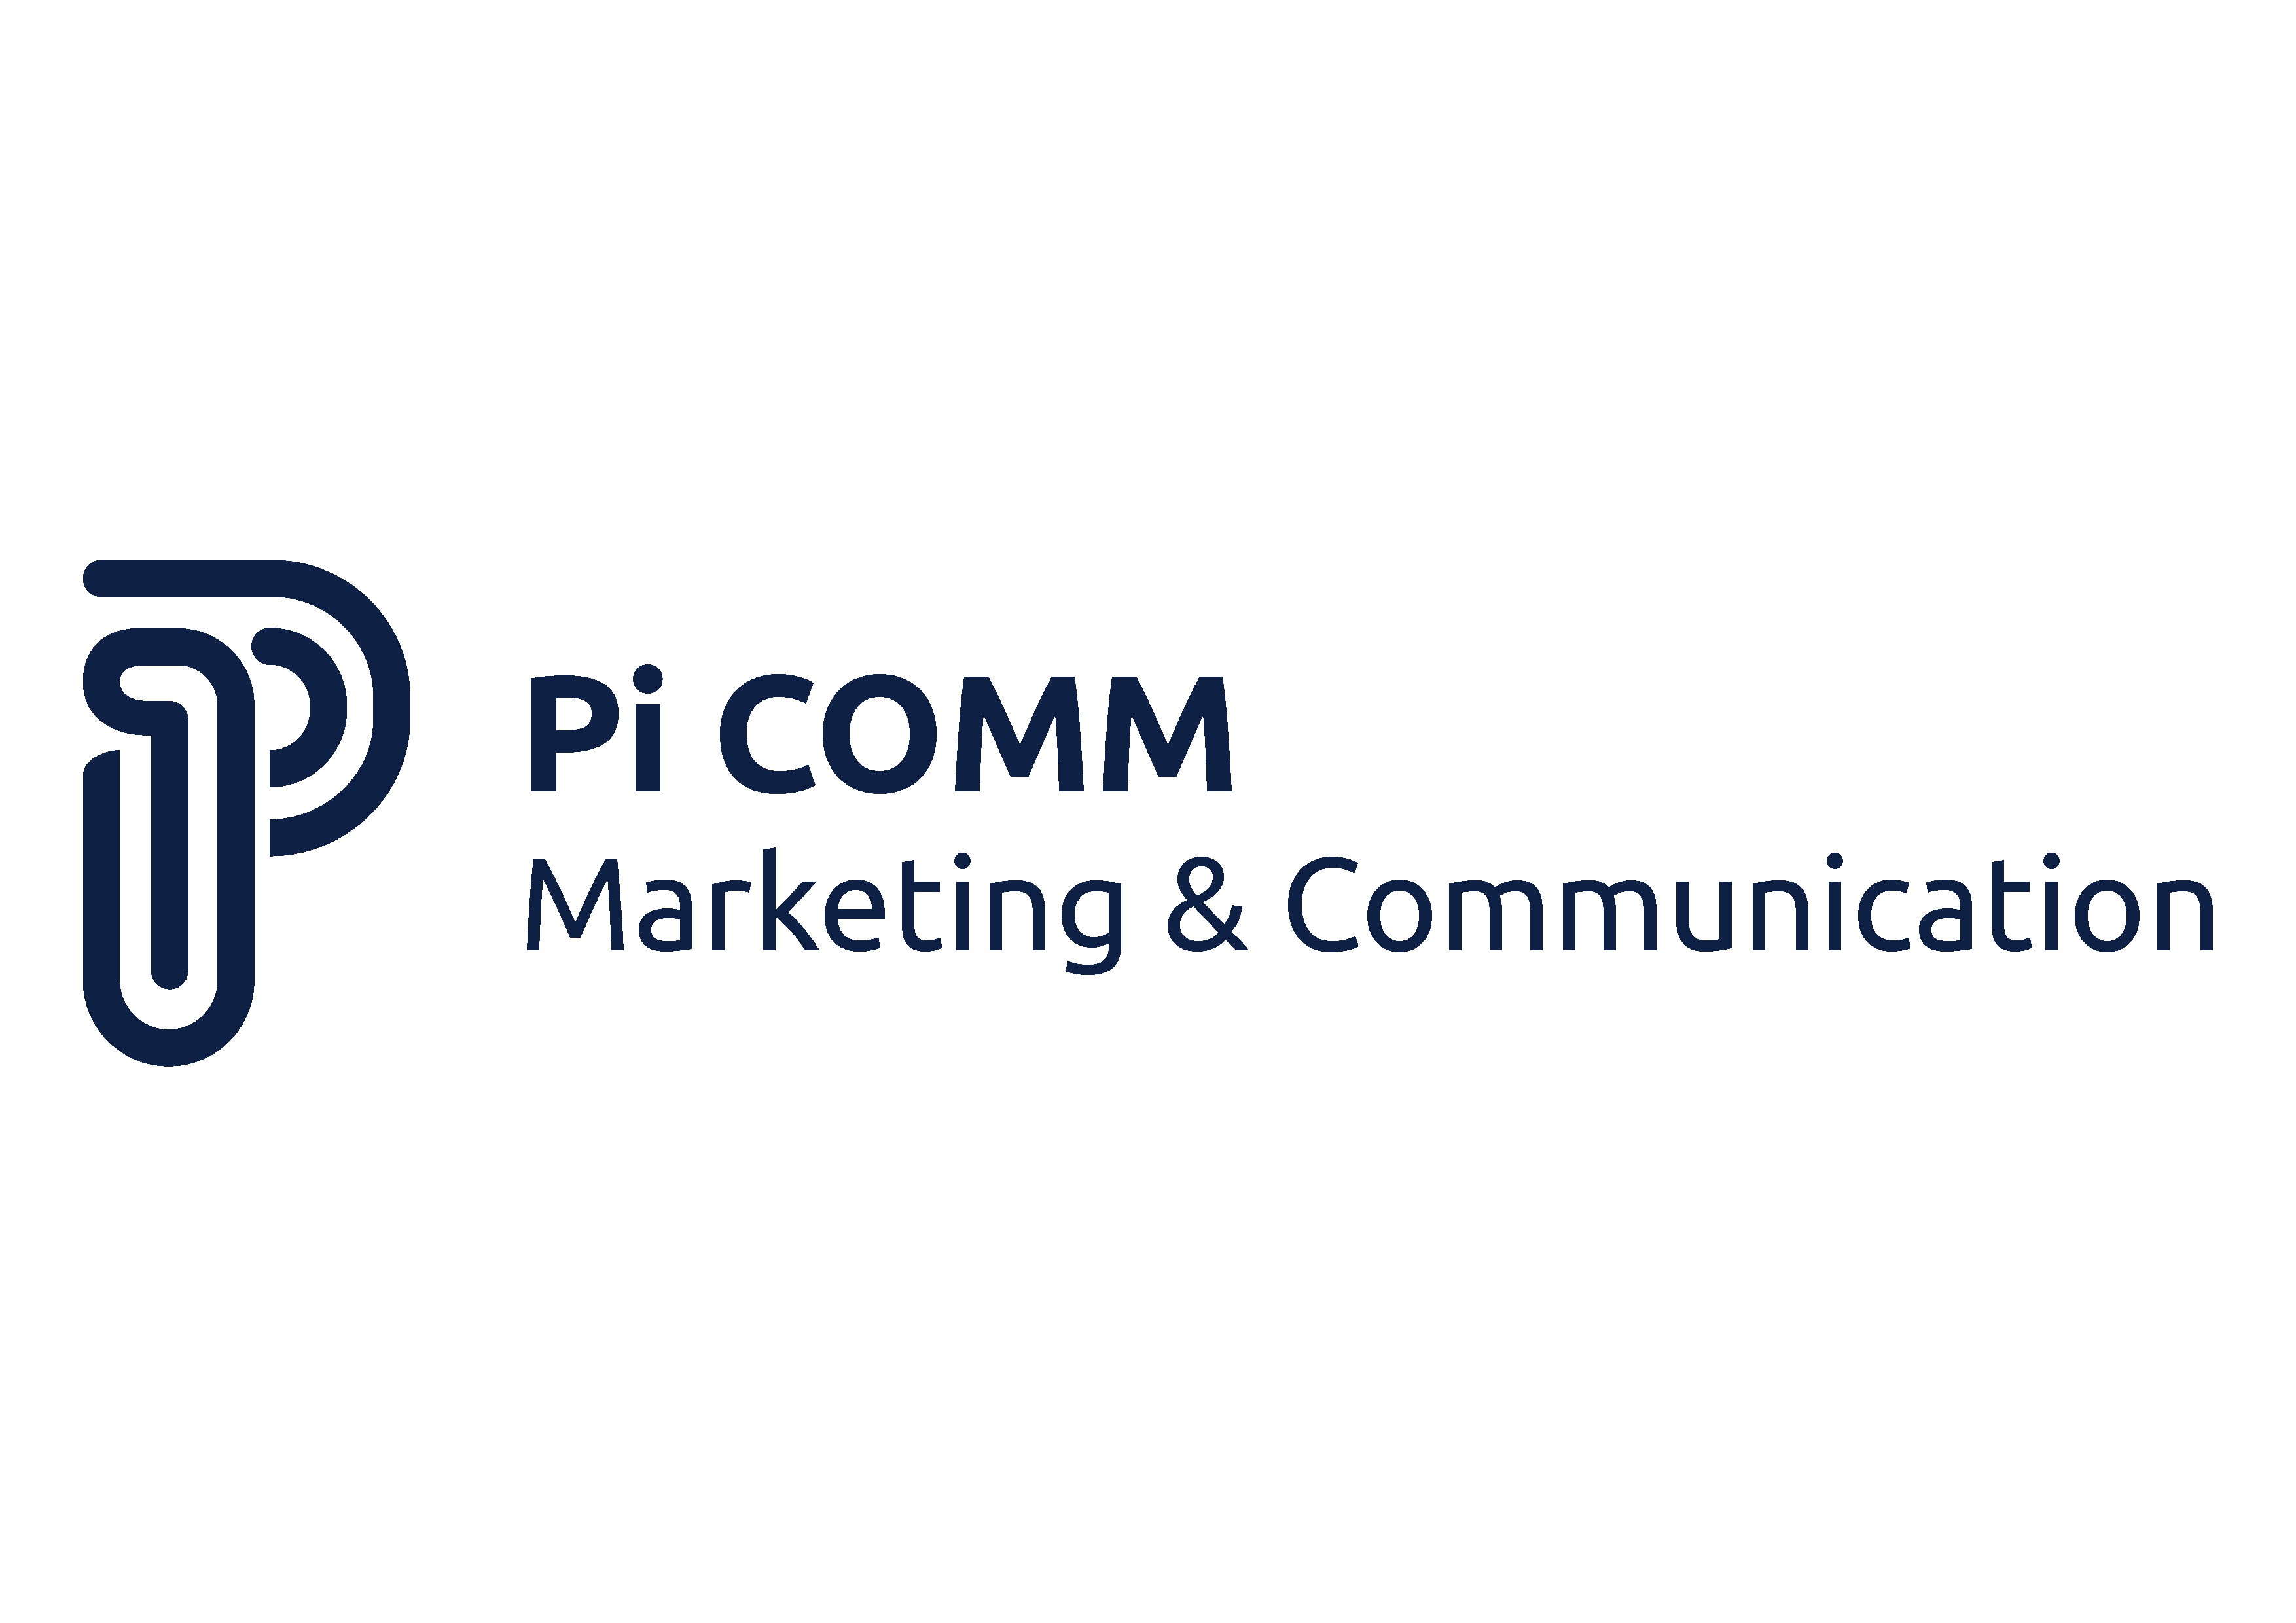 Pi Communication